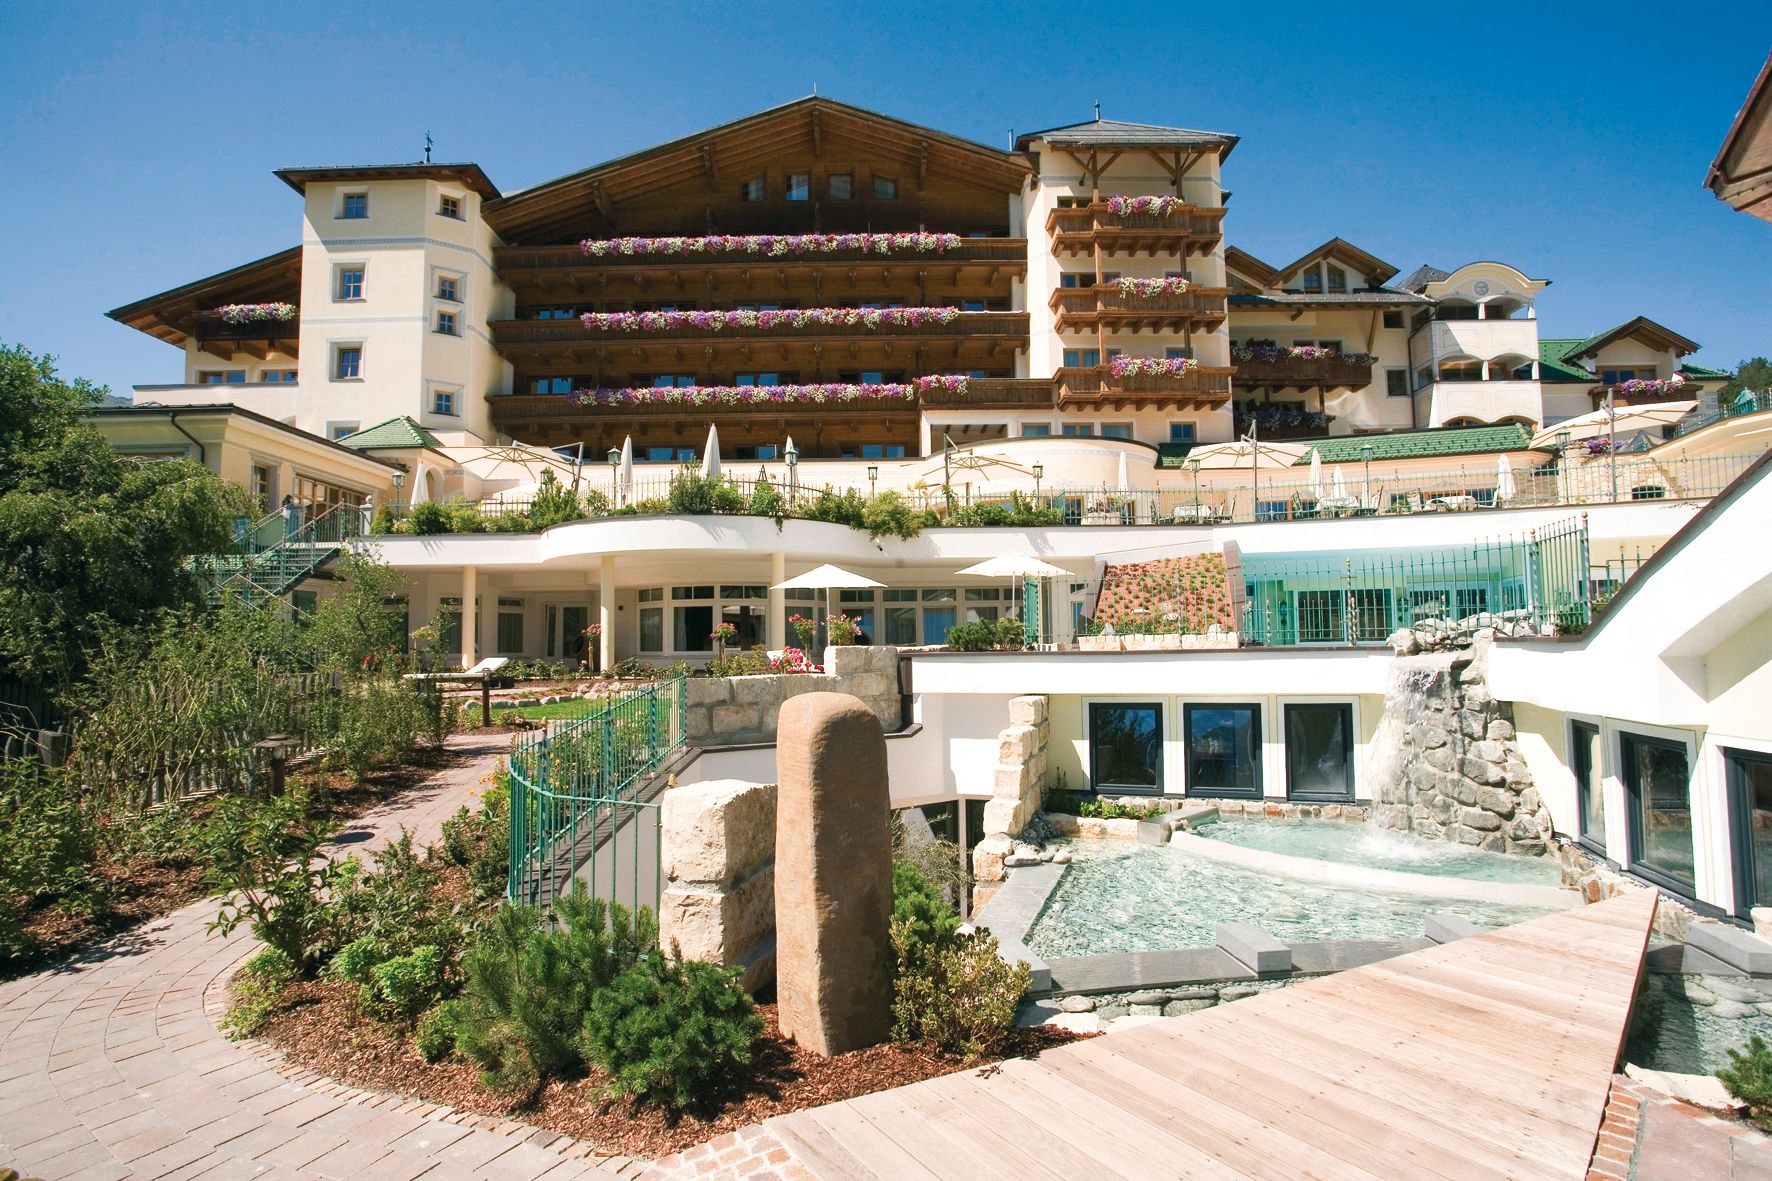 Wellness Residenz Schalber, Tirol – „Landleben in der S-Klasse”